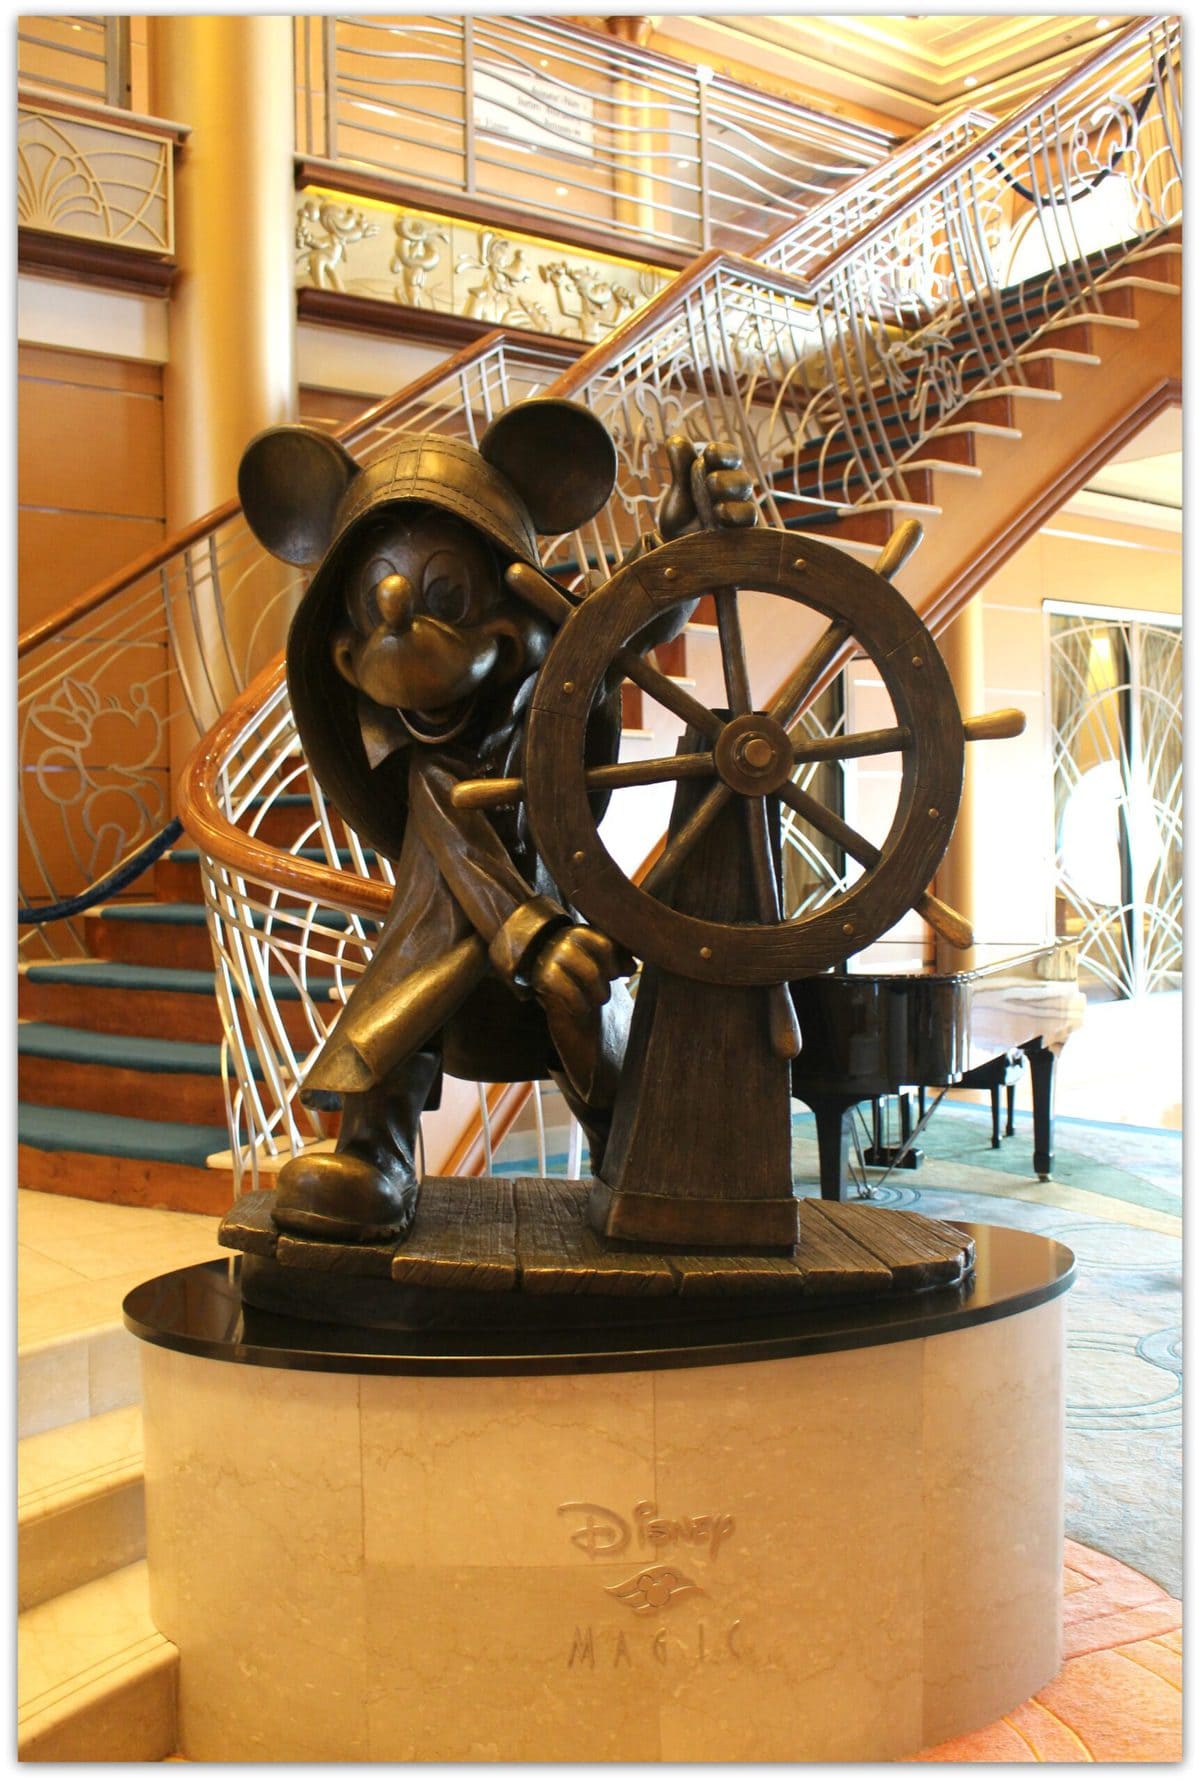 A Peek Inside the Disney Magic Cruise Ship